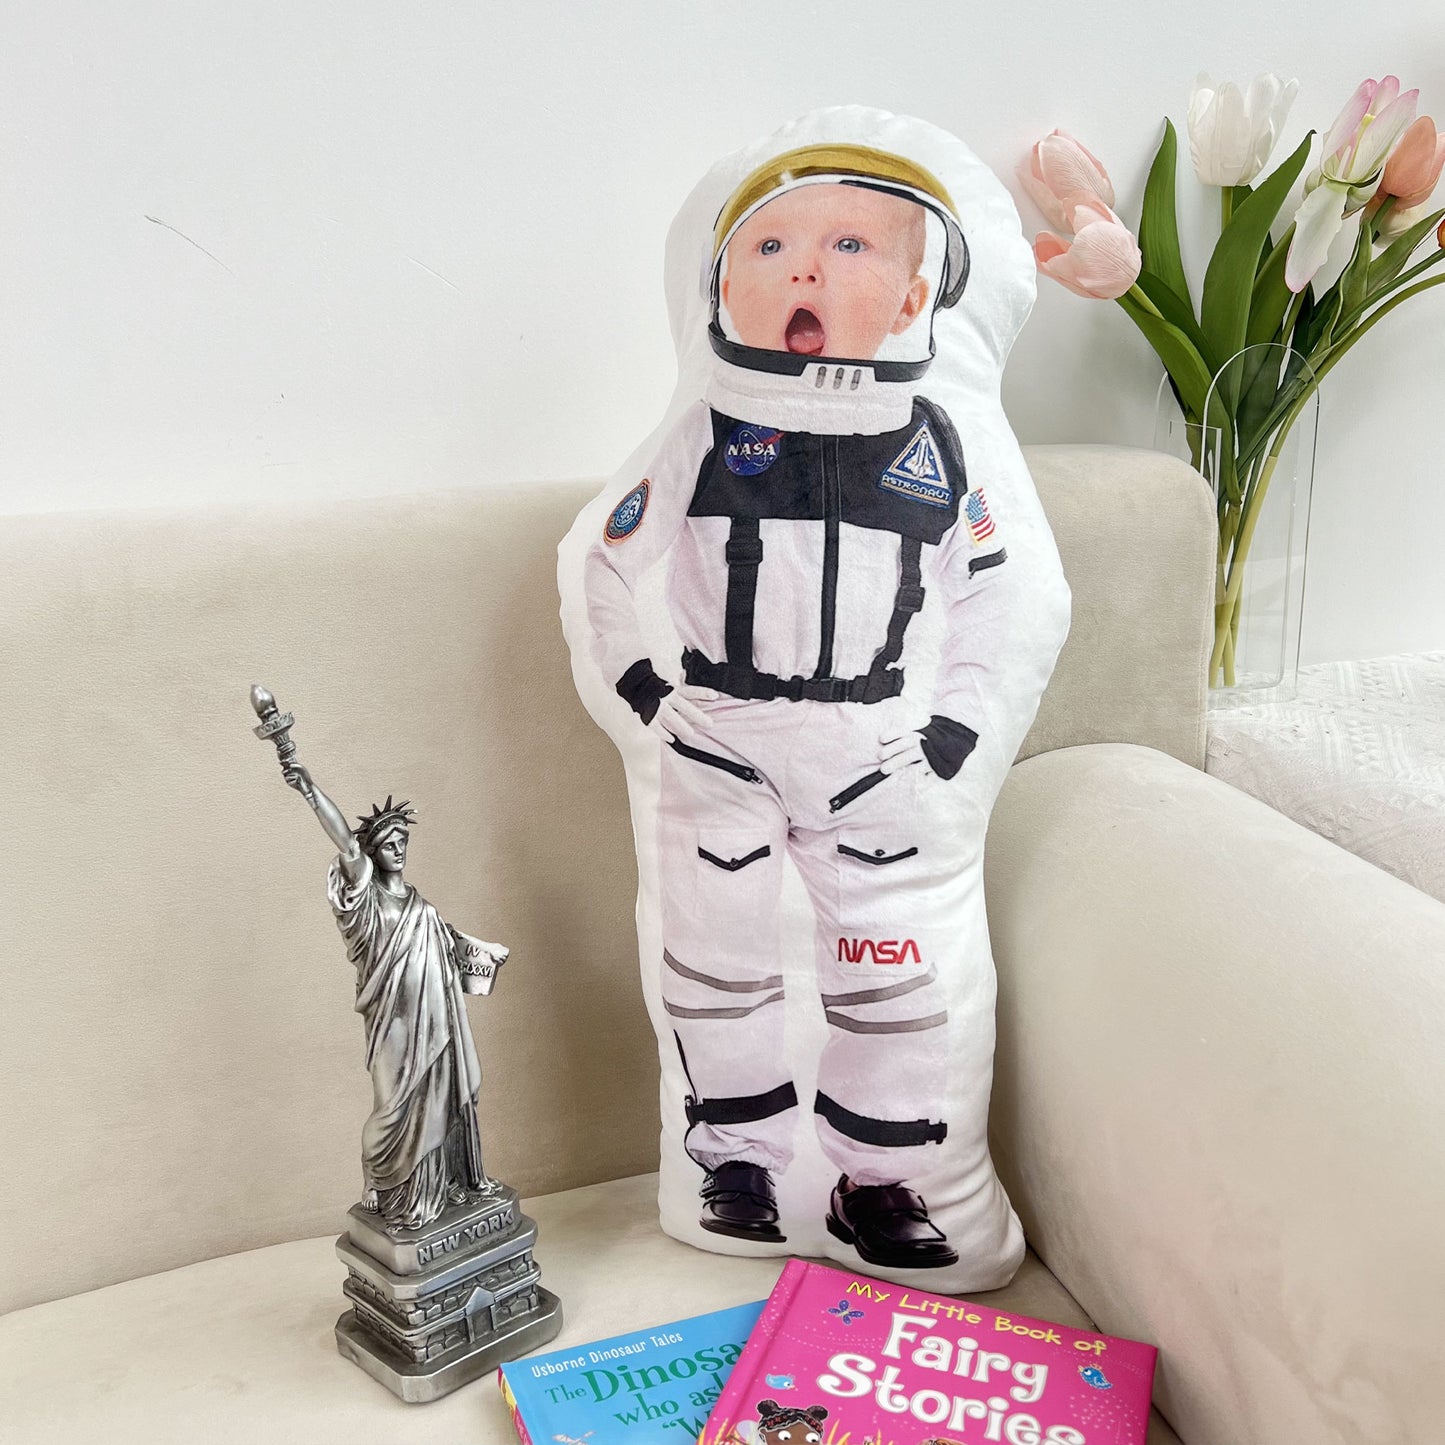 Pilot Kids Astronaut Boys Girls - Personalized Photo Custom Shaped Pillow